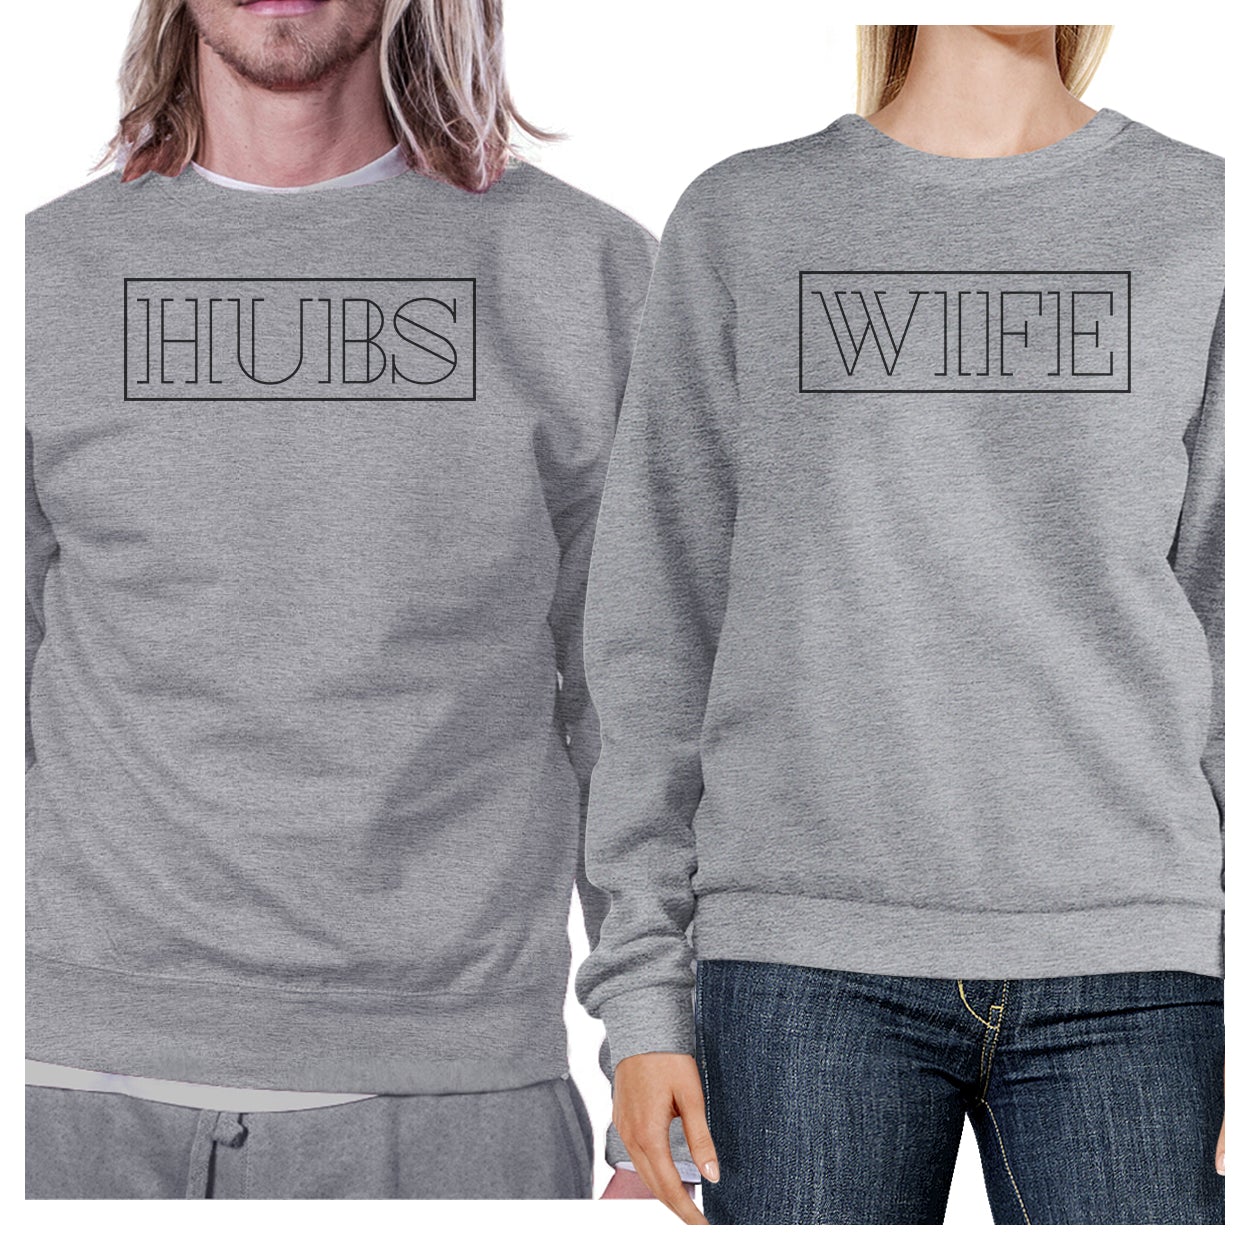 Hubs And Wife Matching Couple Grey Sweatshirts